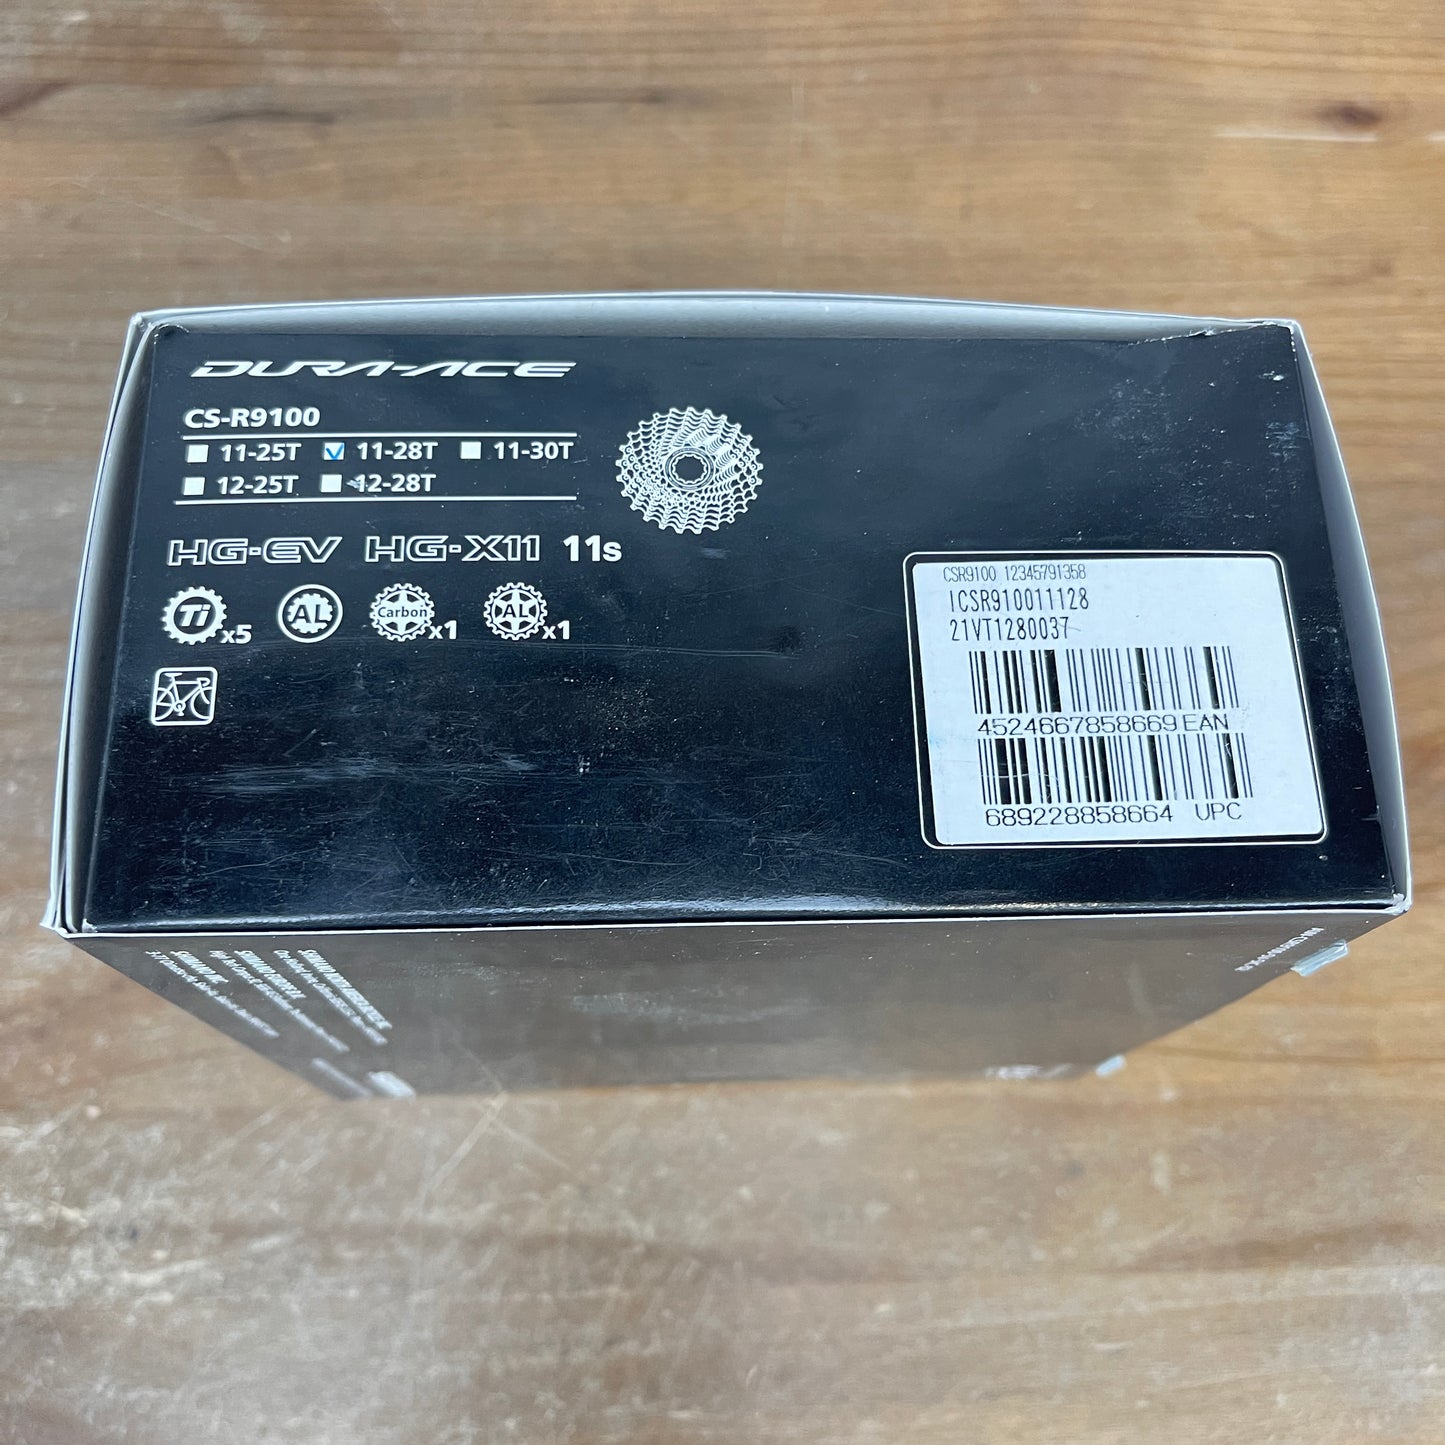 New! Shimano Dura Ace CS-R9100 11-28t 11 Speed Bike Cassette 193g